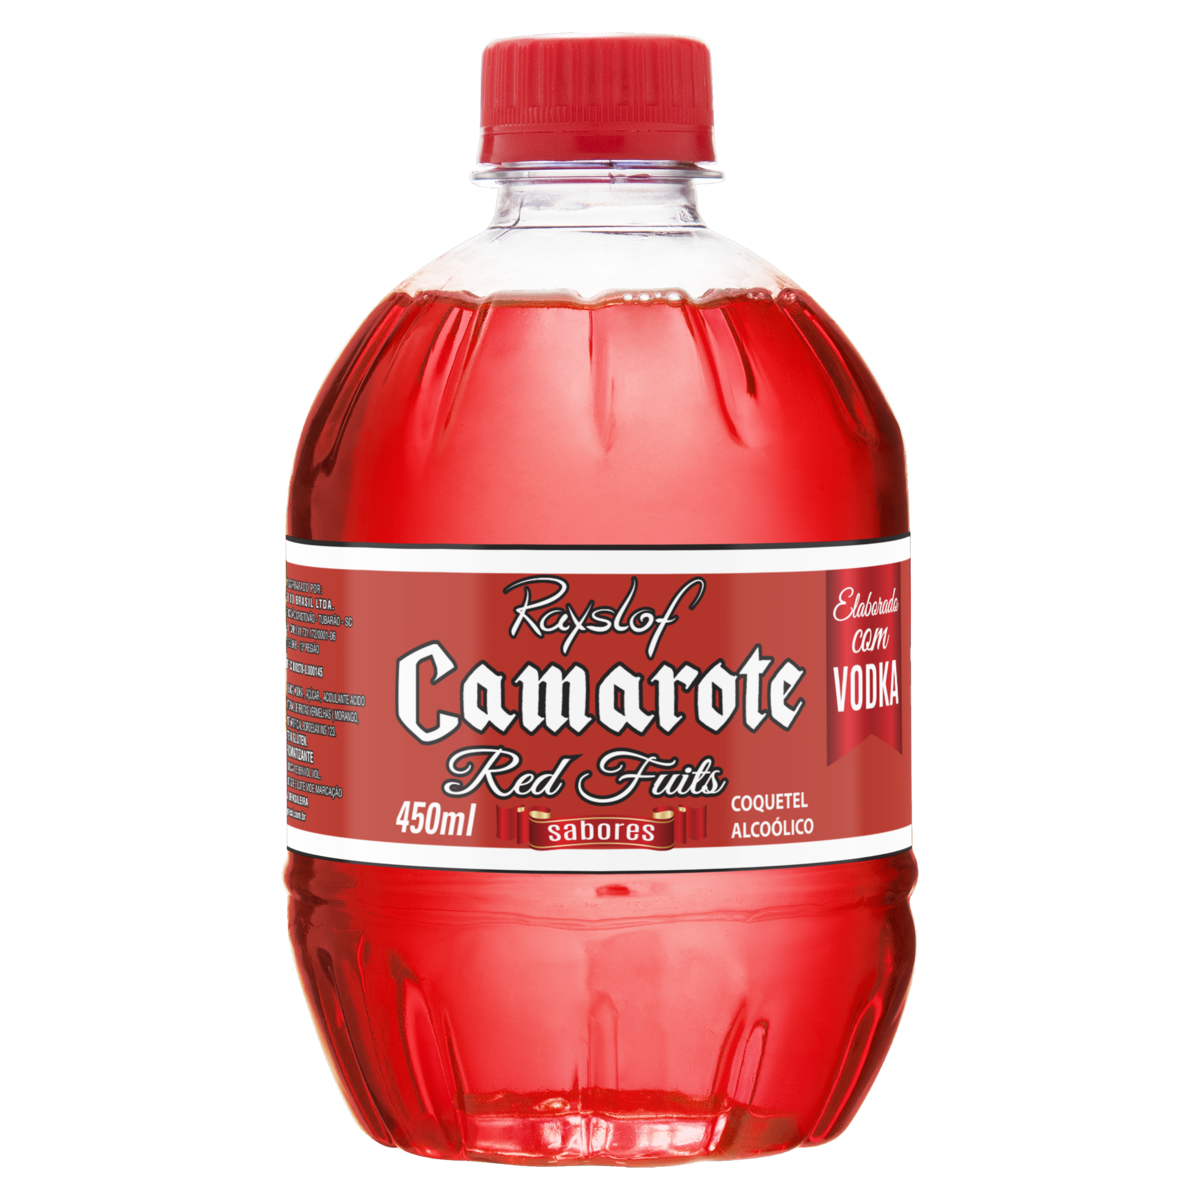 7898080664075 - COQUETEL ALCOÓLICO RED FRUITS RAYSLOF CAMAROTE GARRAFA 450ML